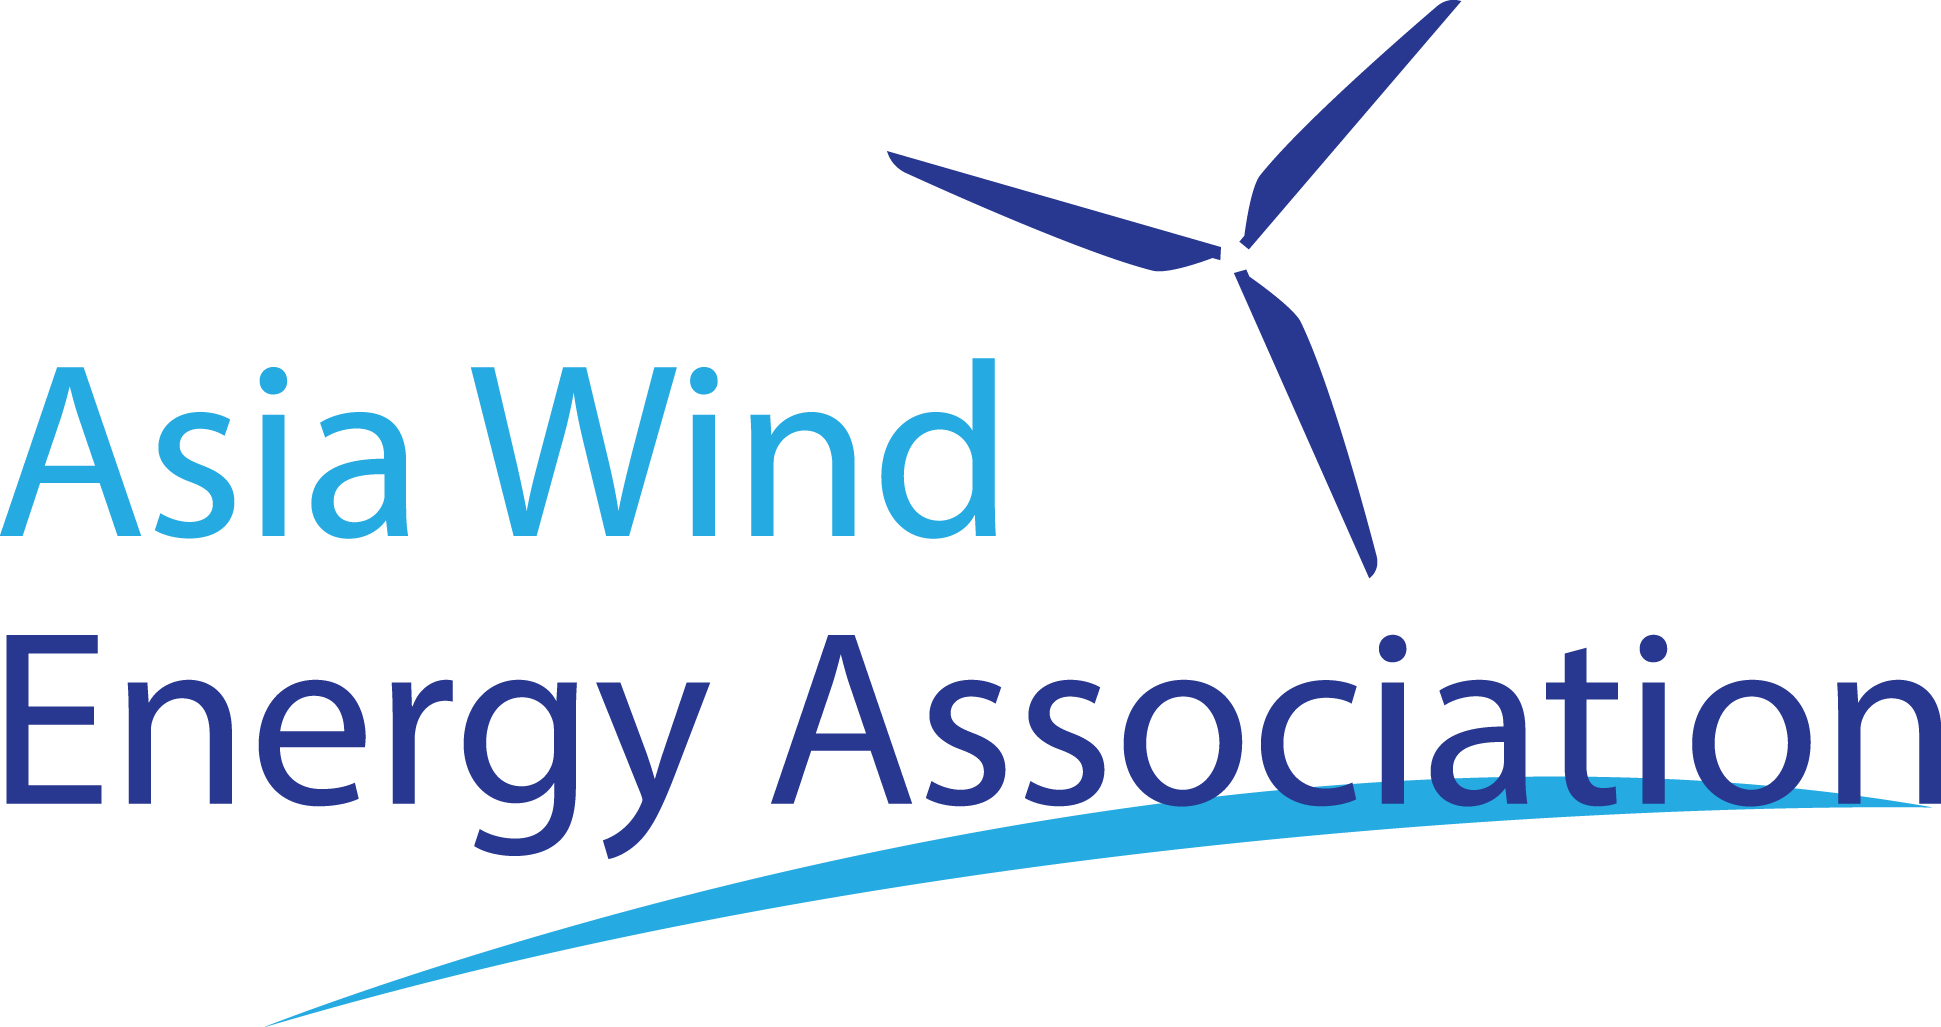 Asia Wind Energy Association logo